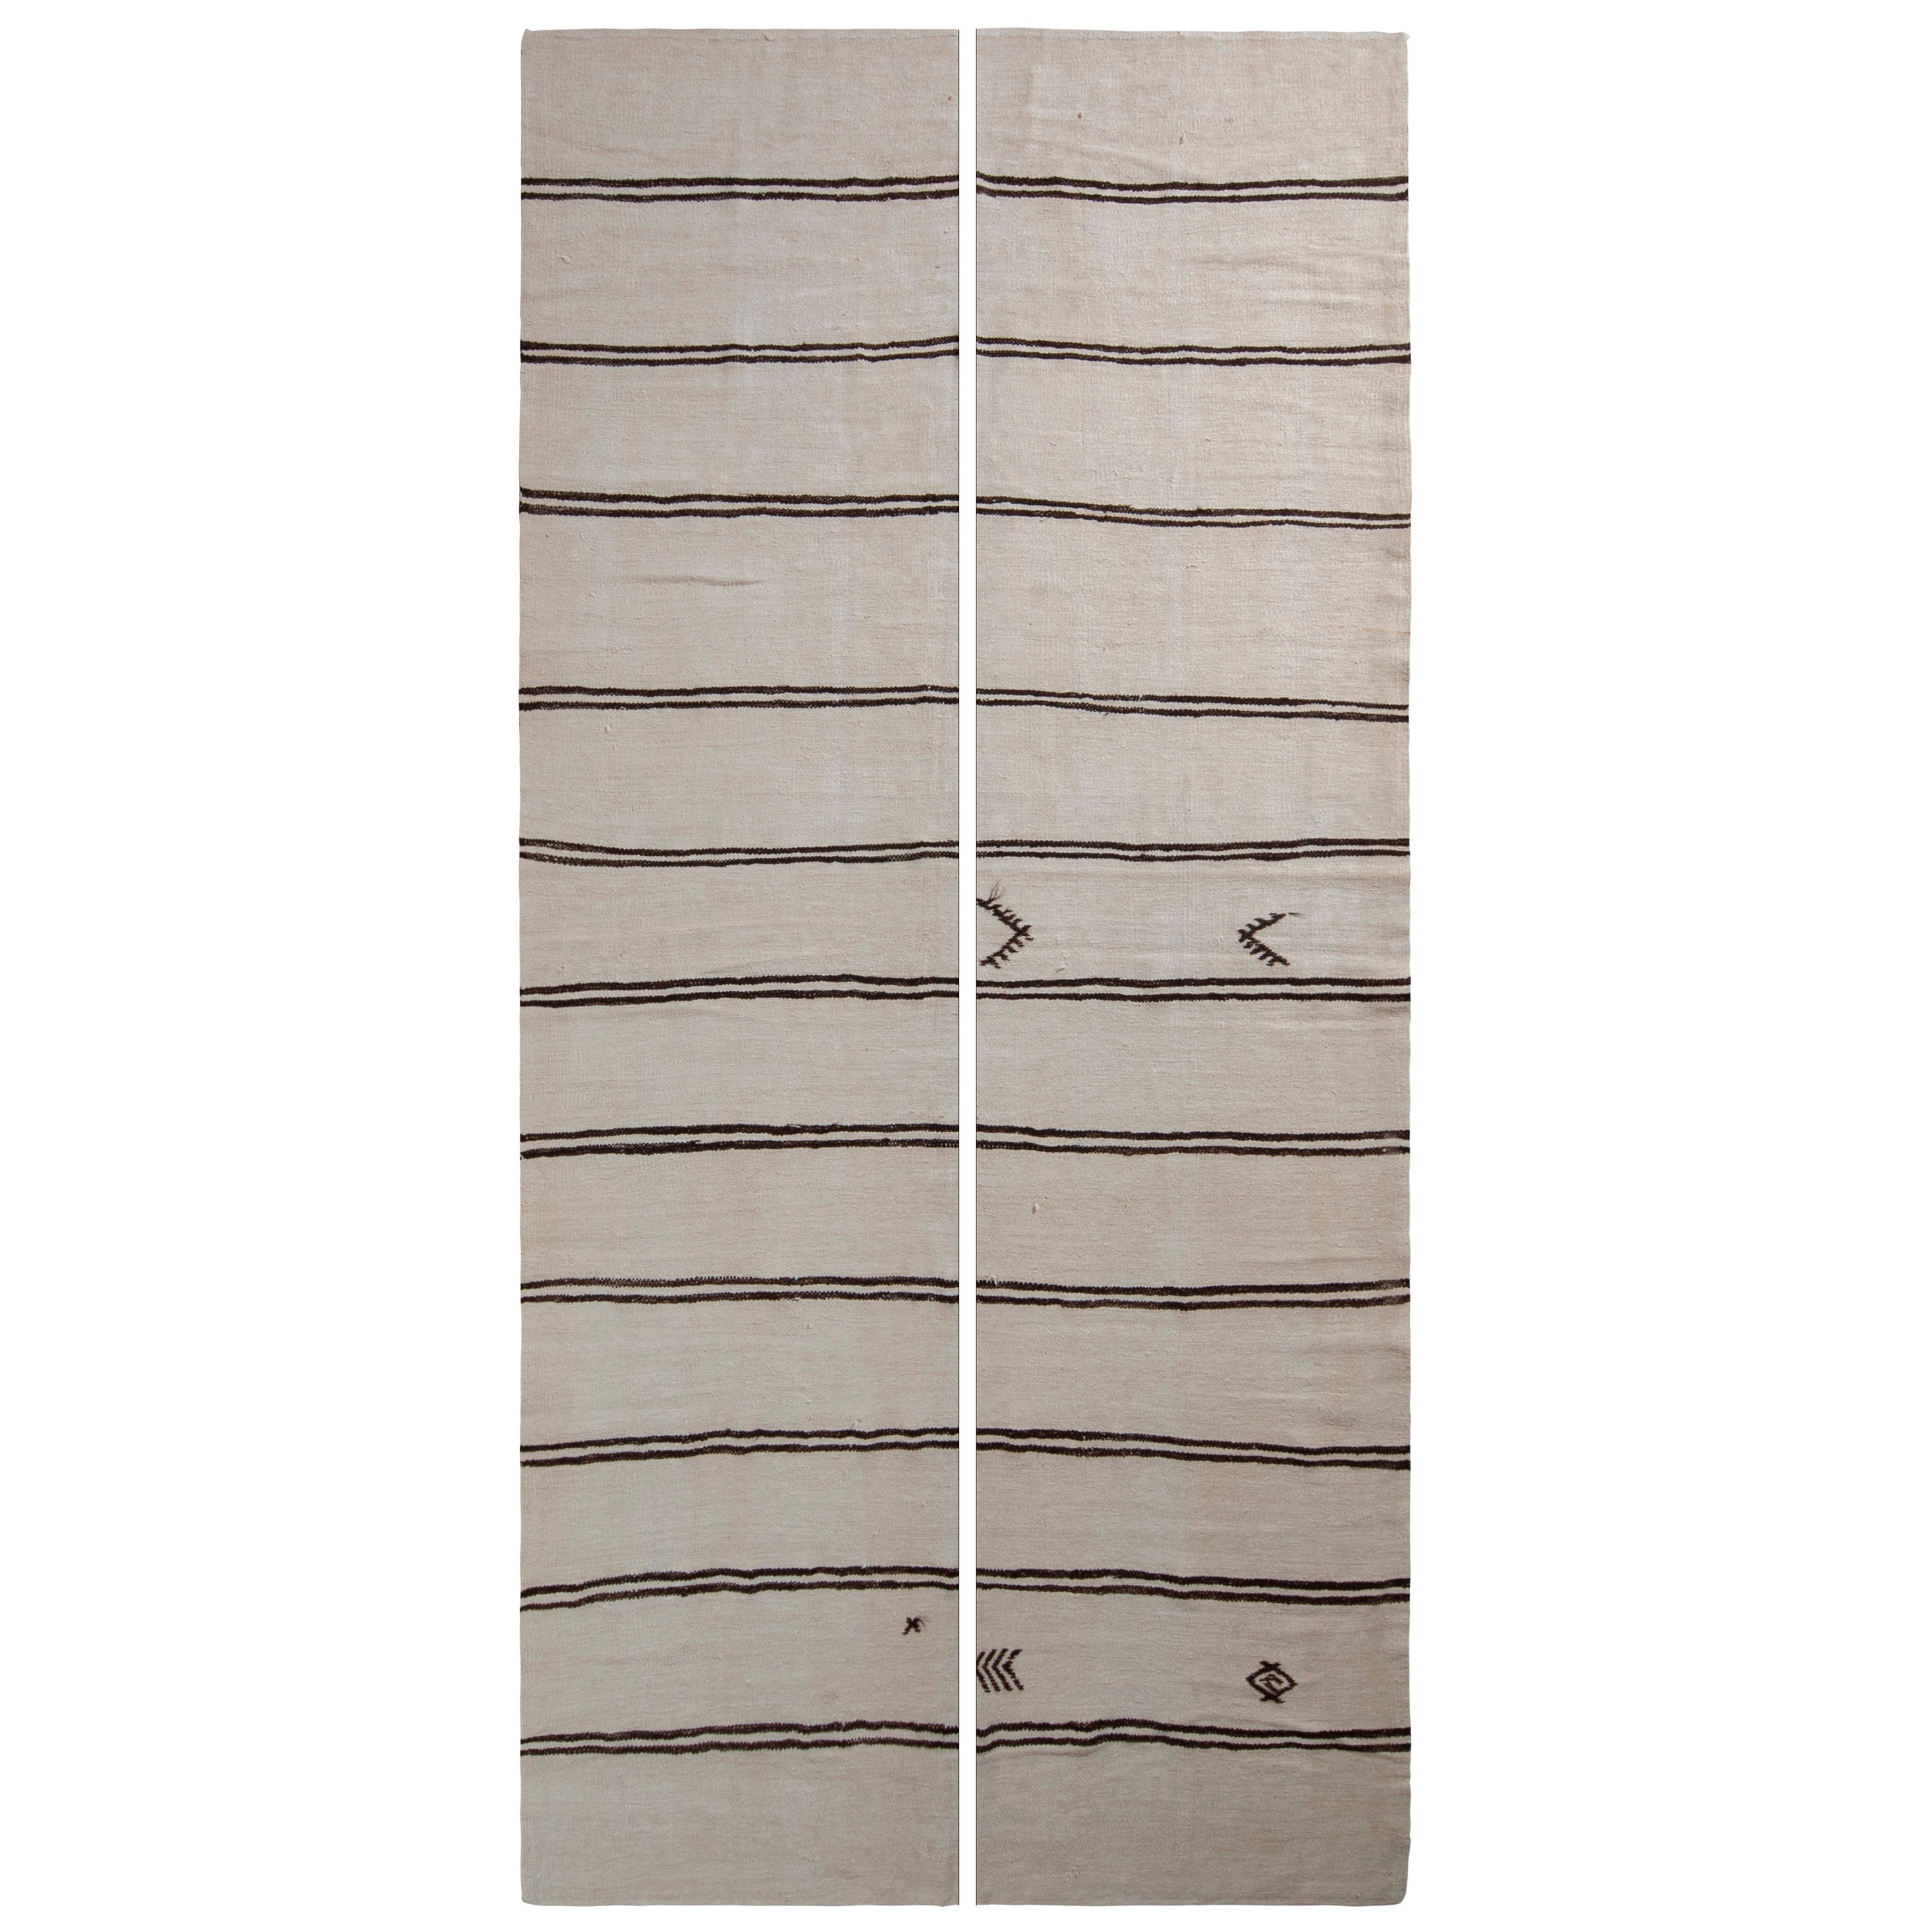 Handwoven Vintage Kilim Rug in Beige-White & Black Stripe Pattern by Rug & Kilim